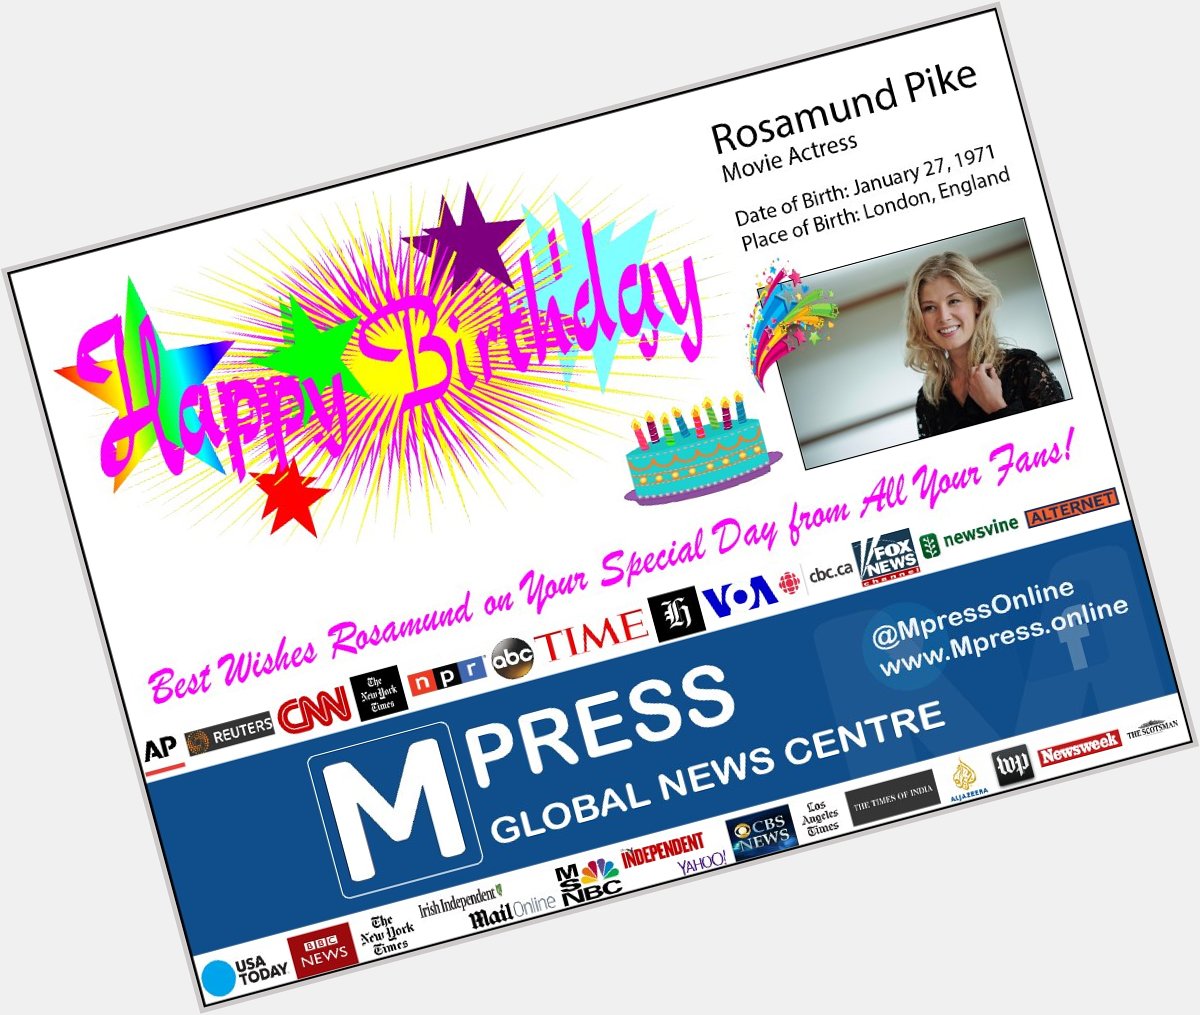 Happy Birthday Rosamund Pike
Mpress Global News Centre 